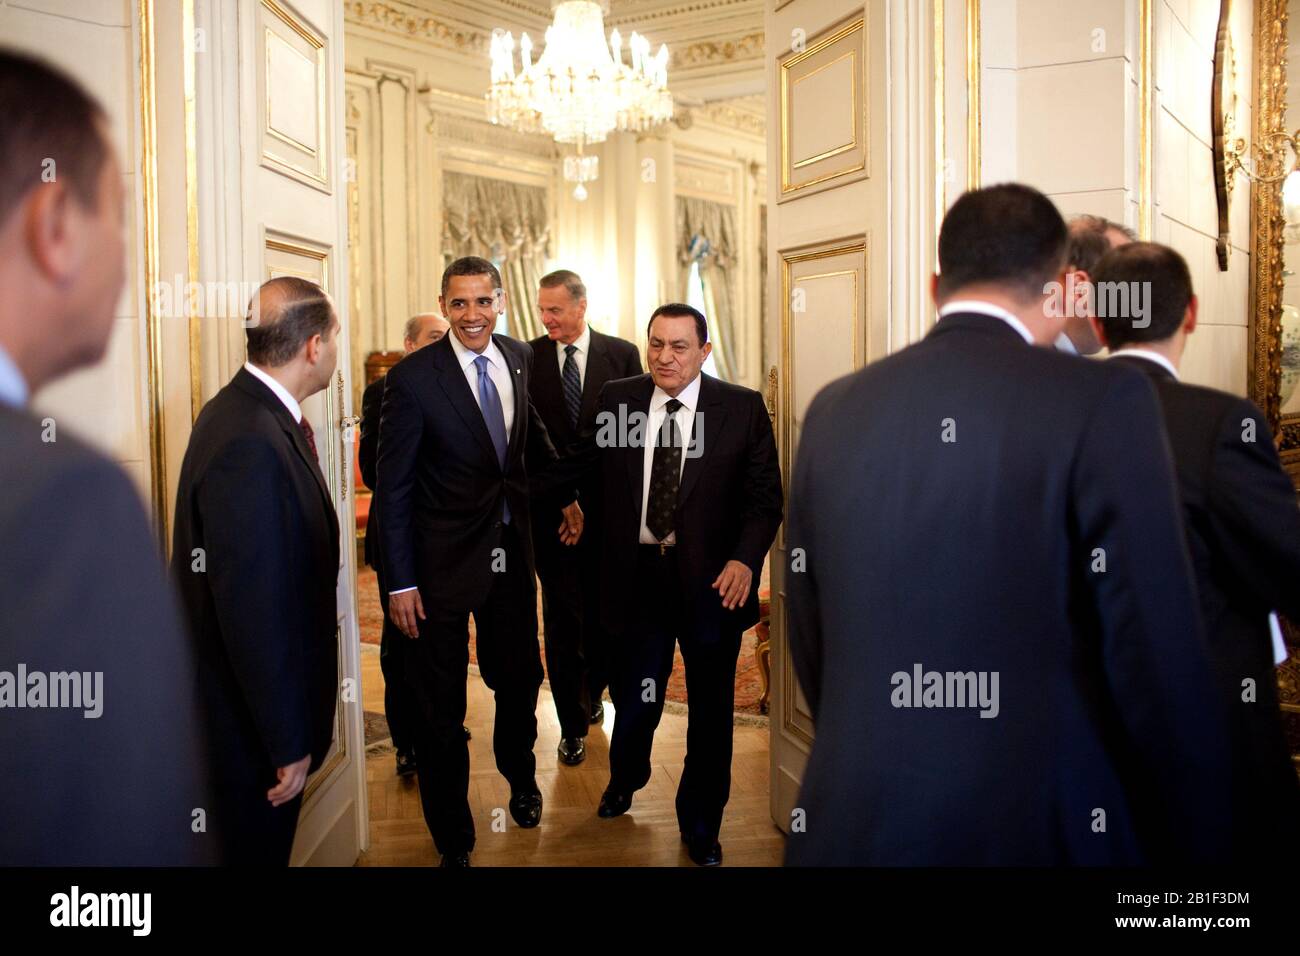 Kairo, Ägypten - 4. Juni 2009 -- US-Präsident Barack Obama trifft sich mit dem ägyptischen Präsidenten Husni Mubarak in Kairo, Ägypten, Donnerstag, 4. Juni 2009. .Mandatory Credit: Pete Souza - White House über CNP /MediaPunch Stockfoto